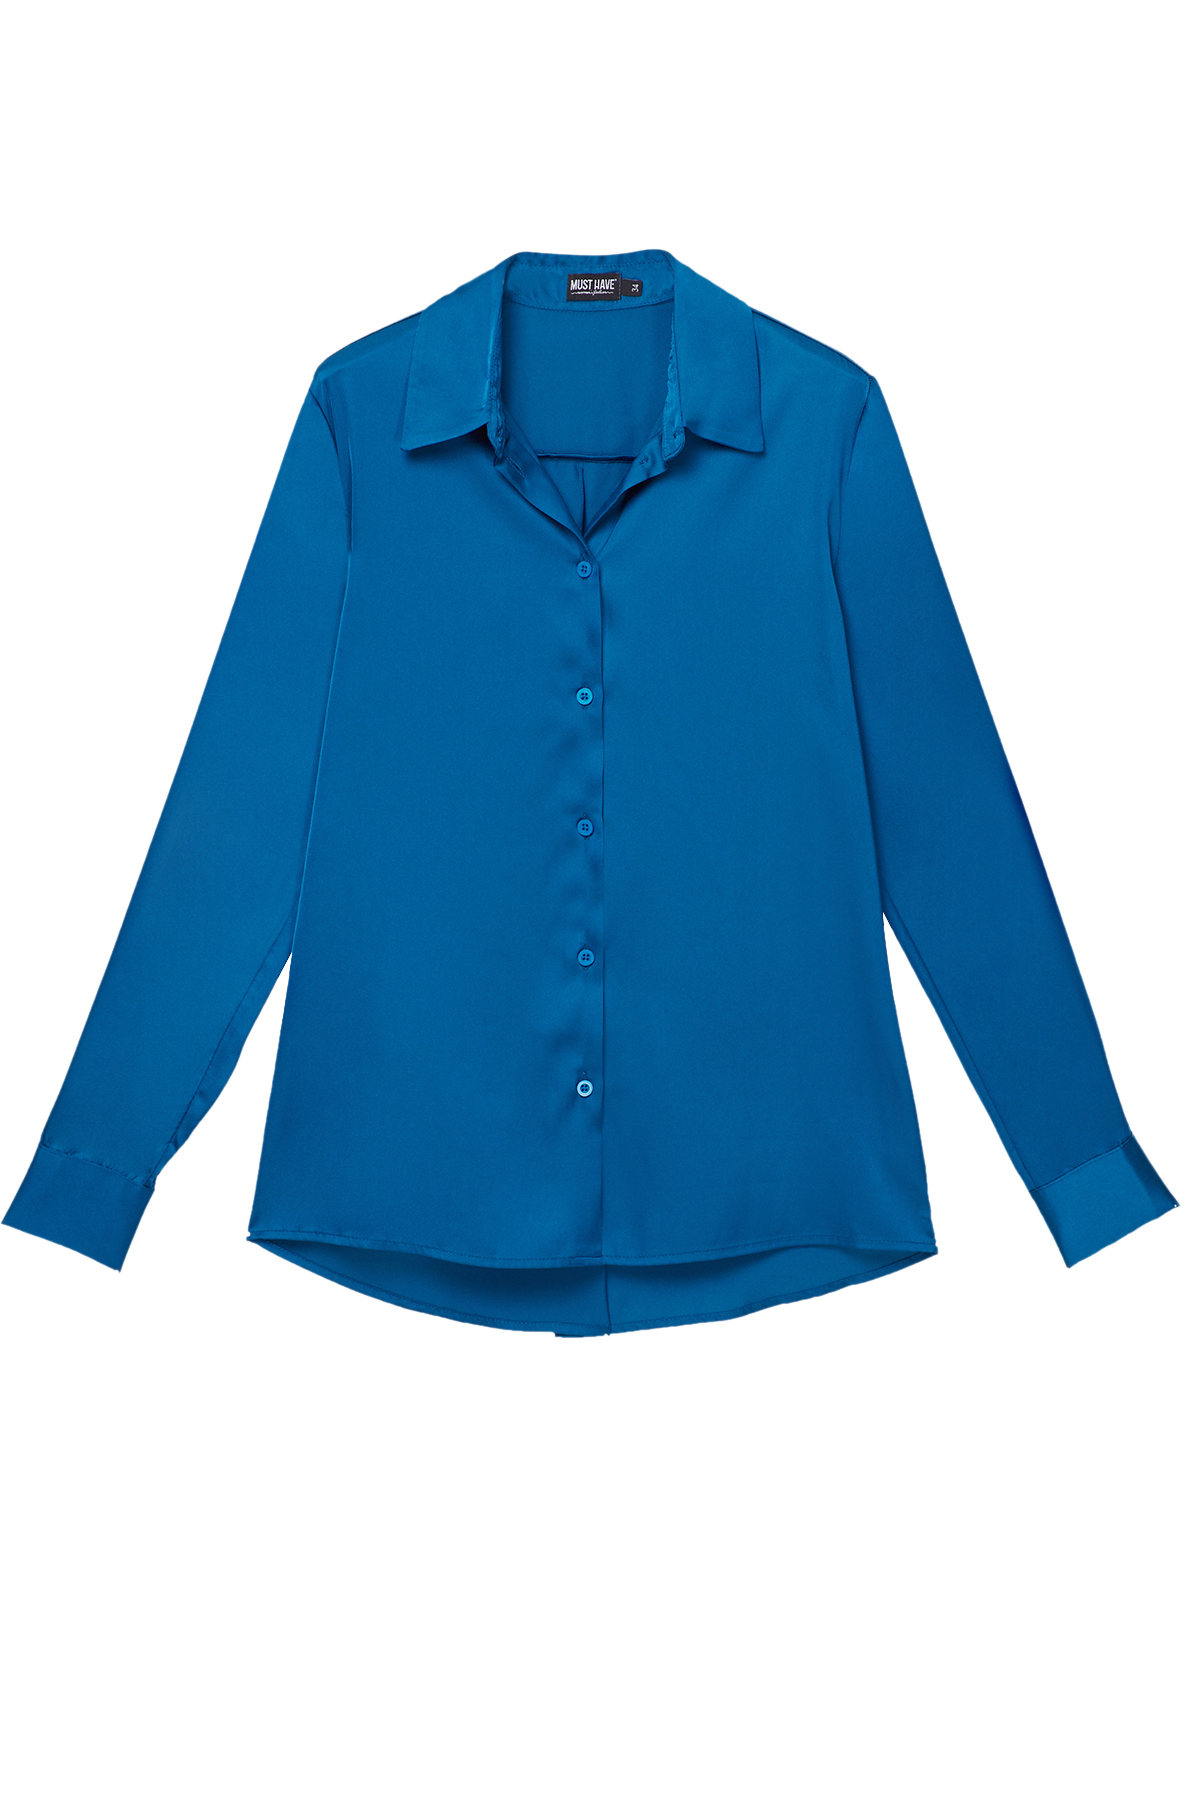 Electric blue loose-fit satin shirt, photo 6